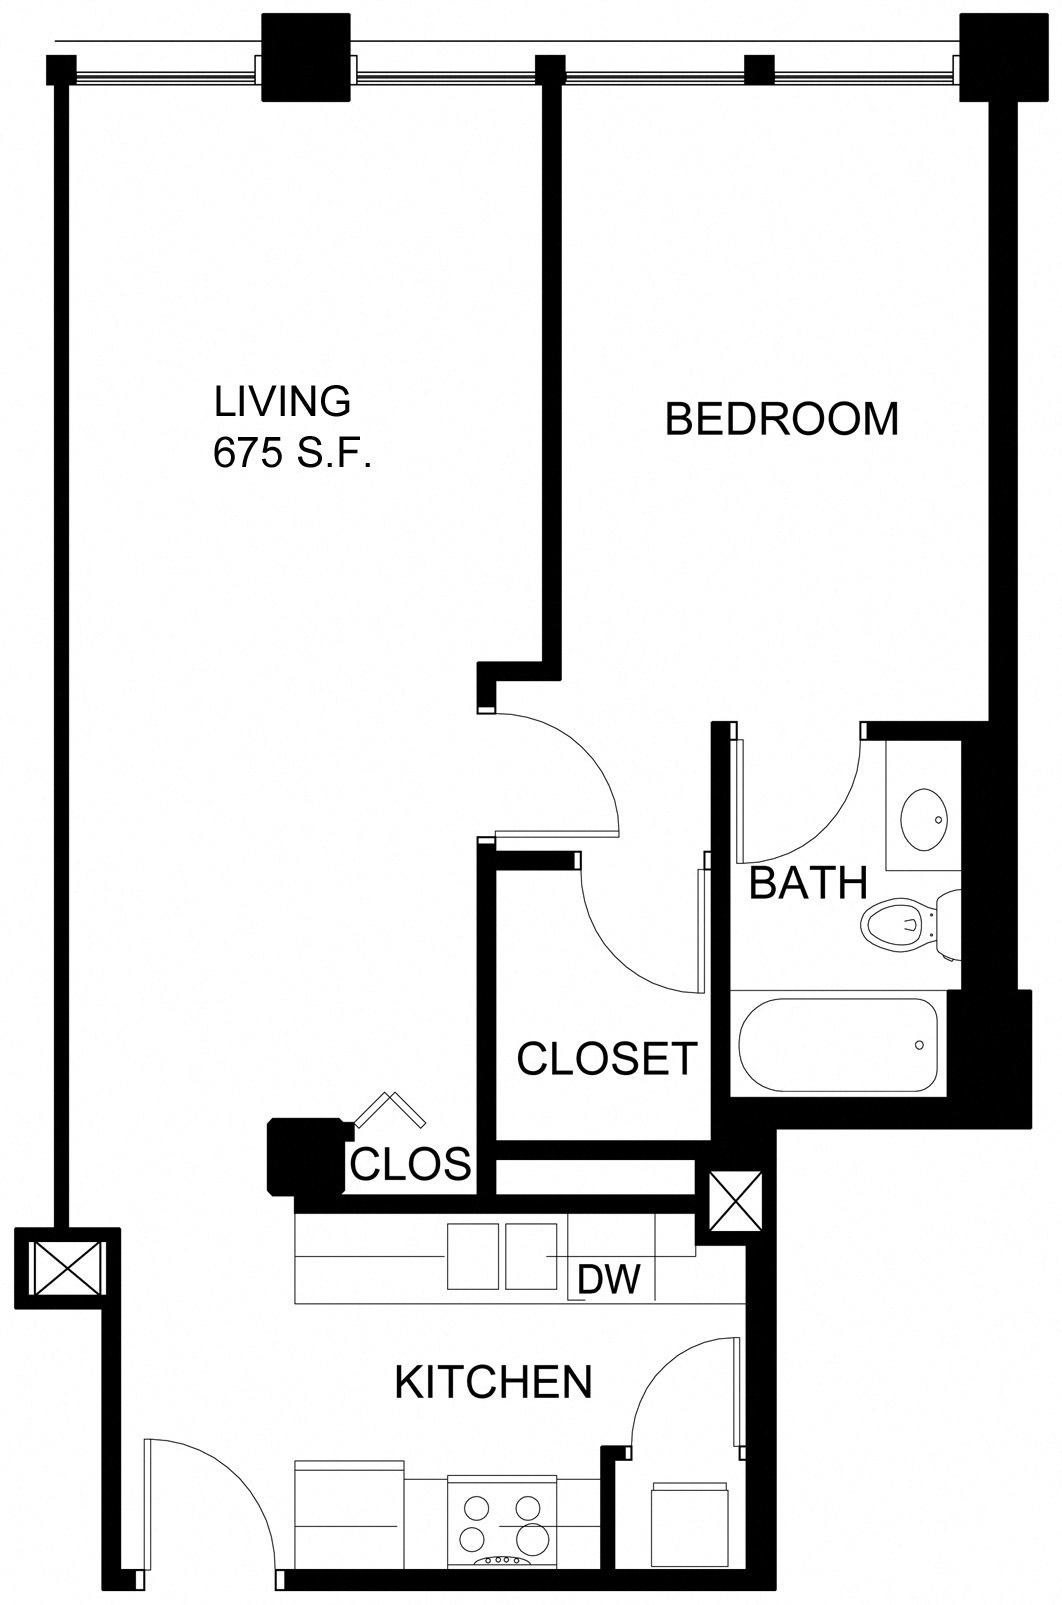 Floorplan for Apartment #P429B, 1 bedroom unit at Halstead Providence